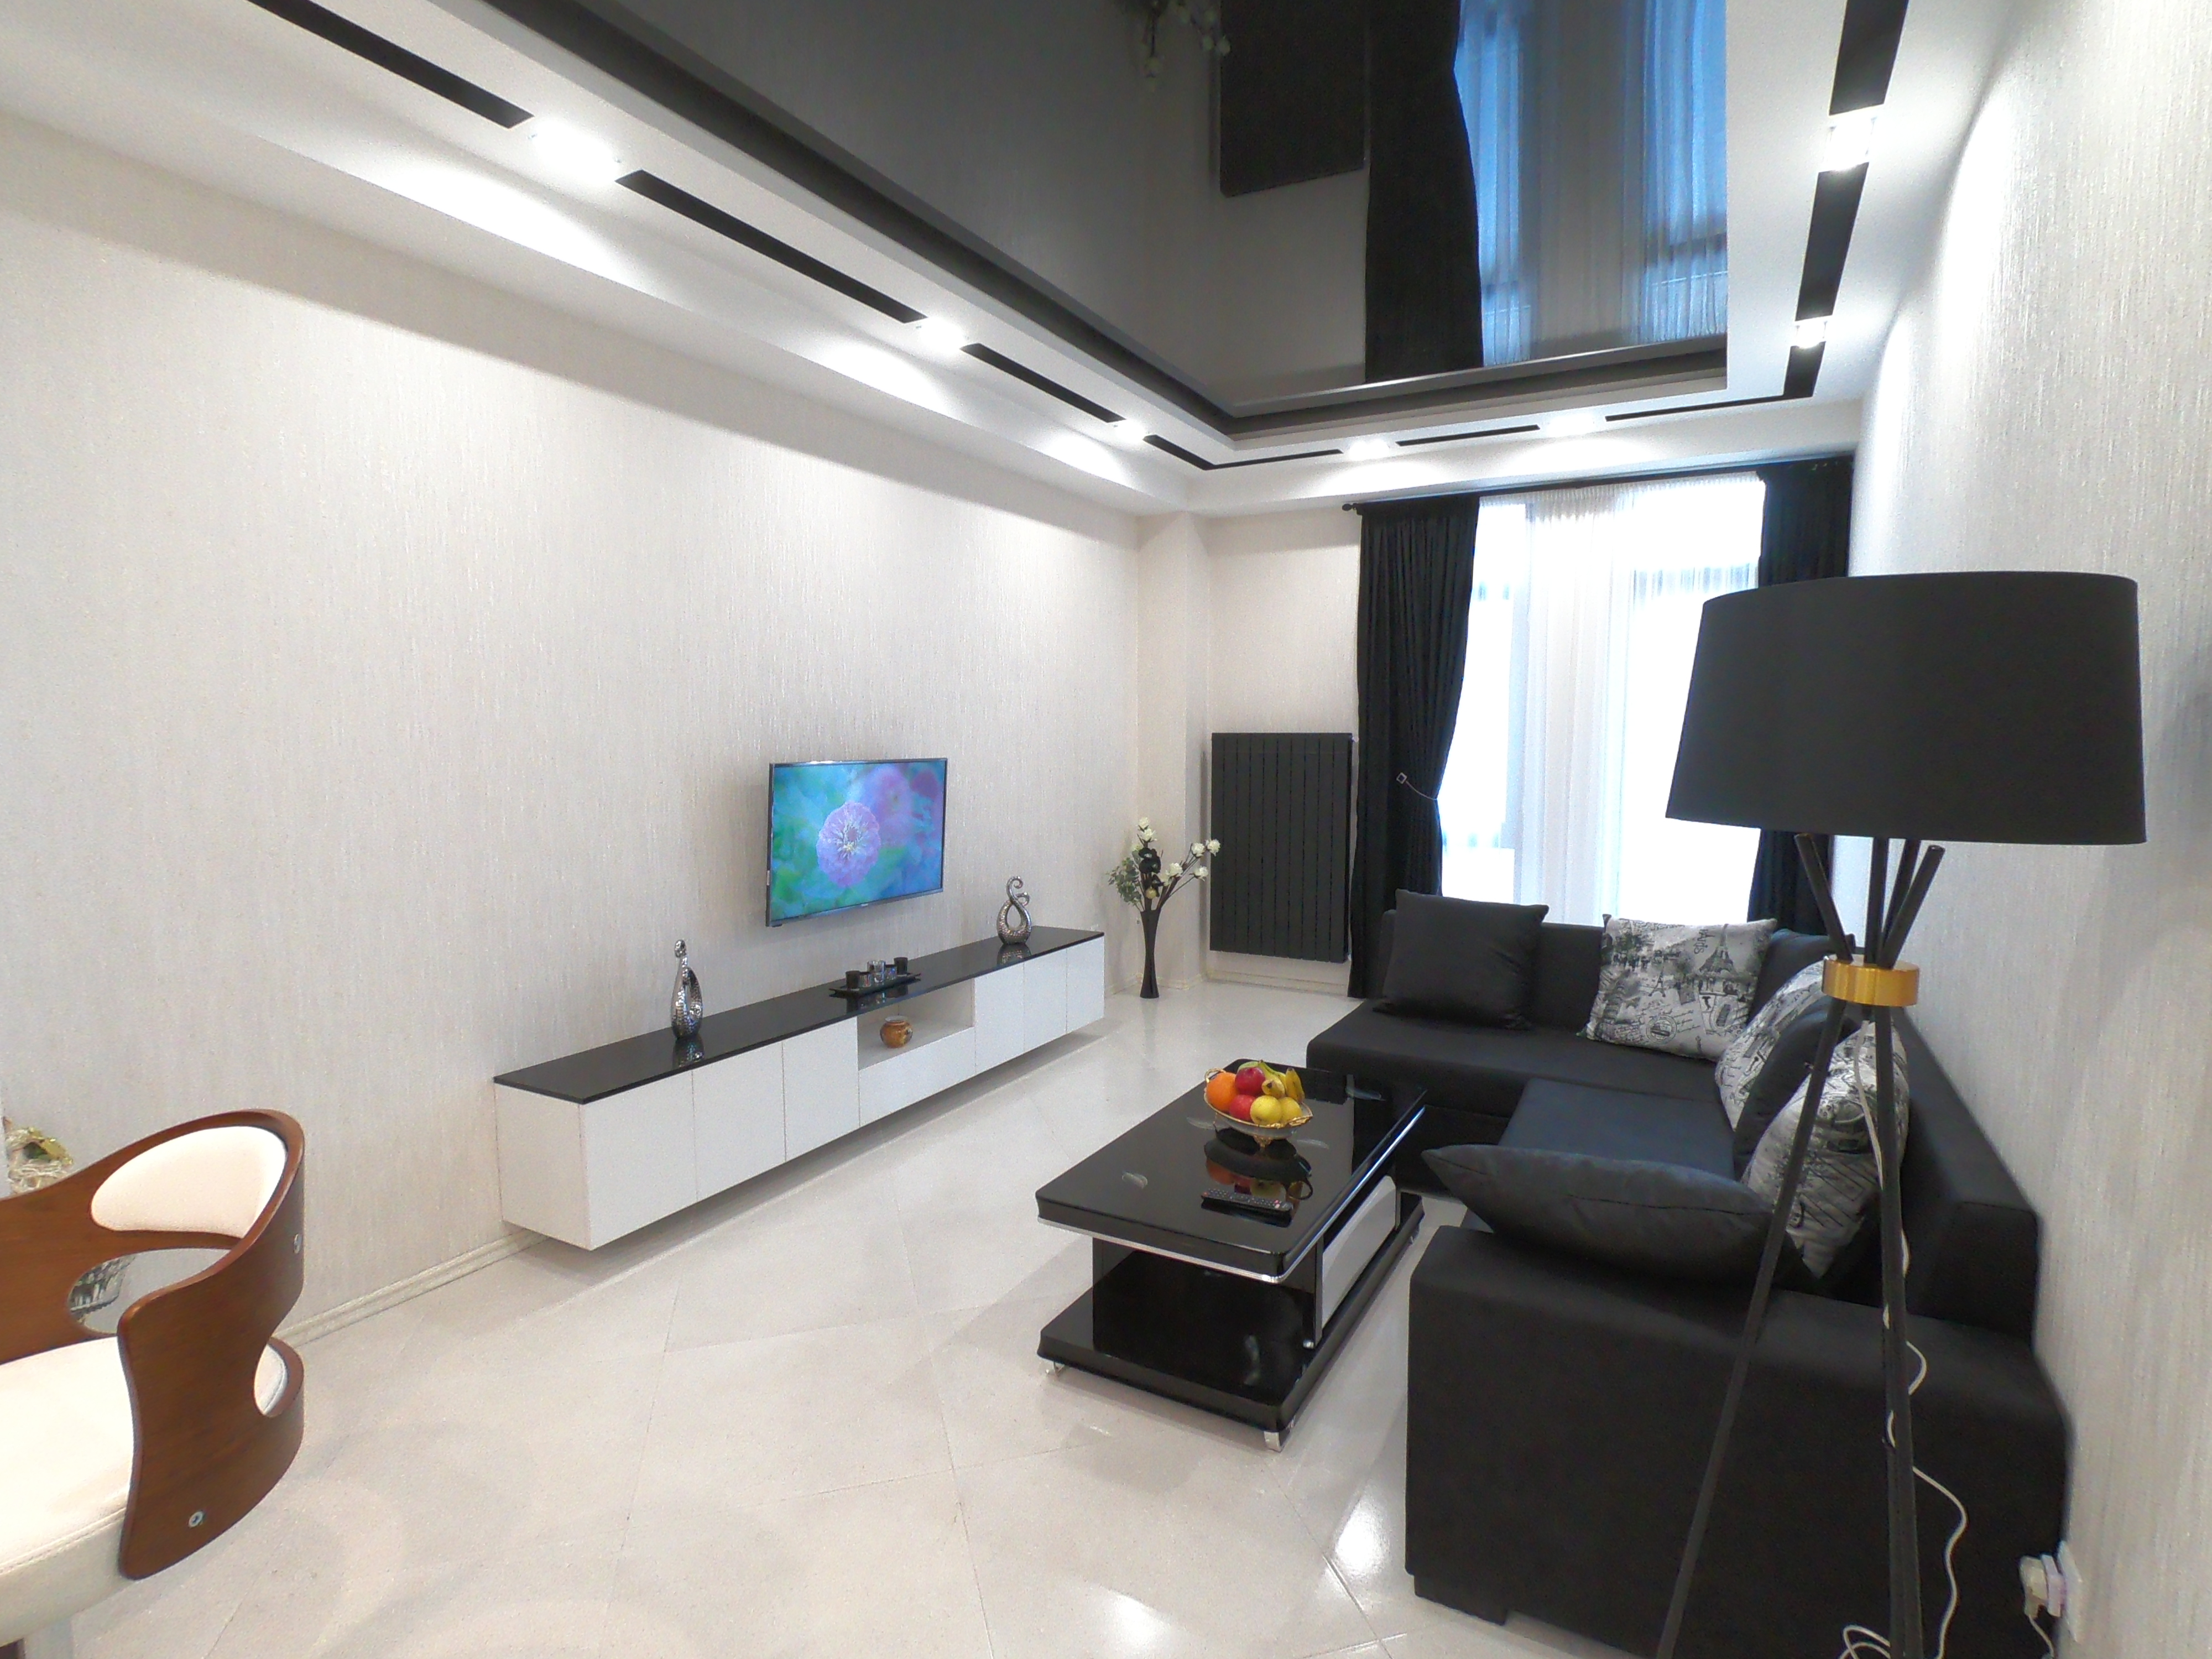 2-Room Apartment For Rent On Kalandadze Street, In Ortachala